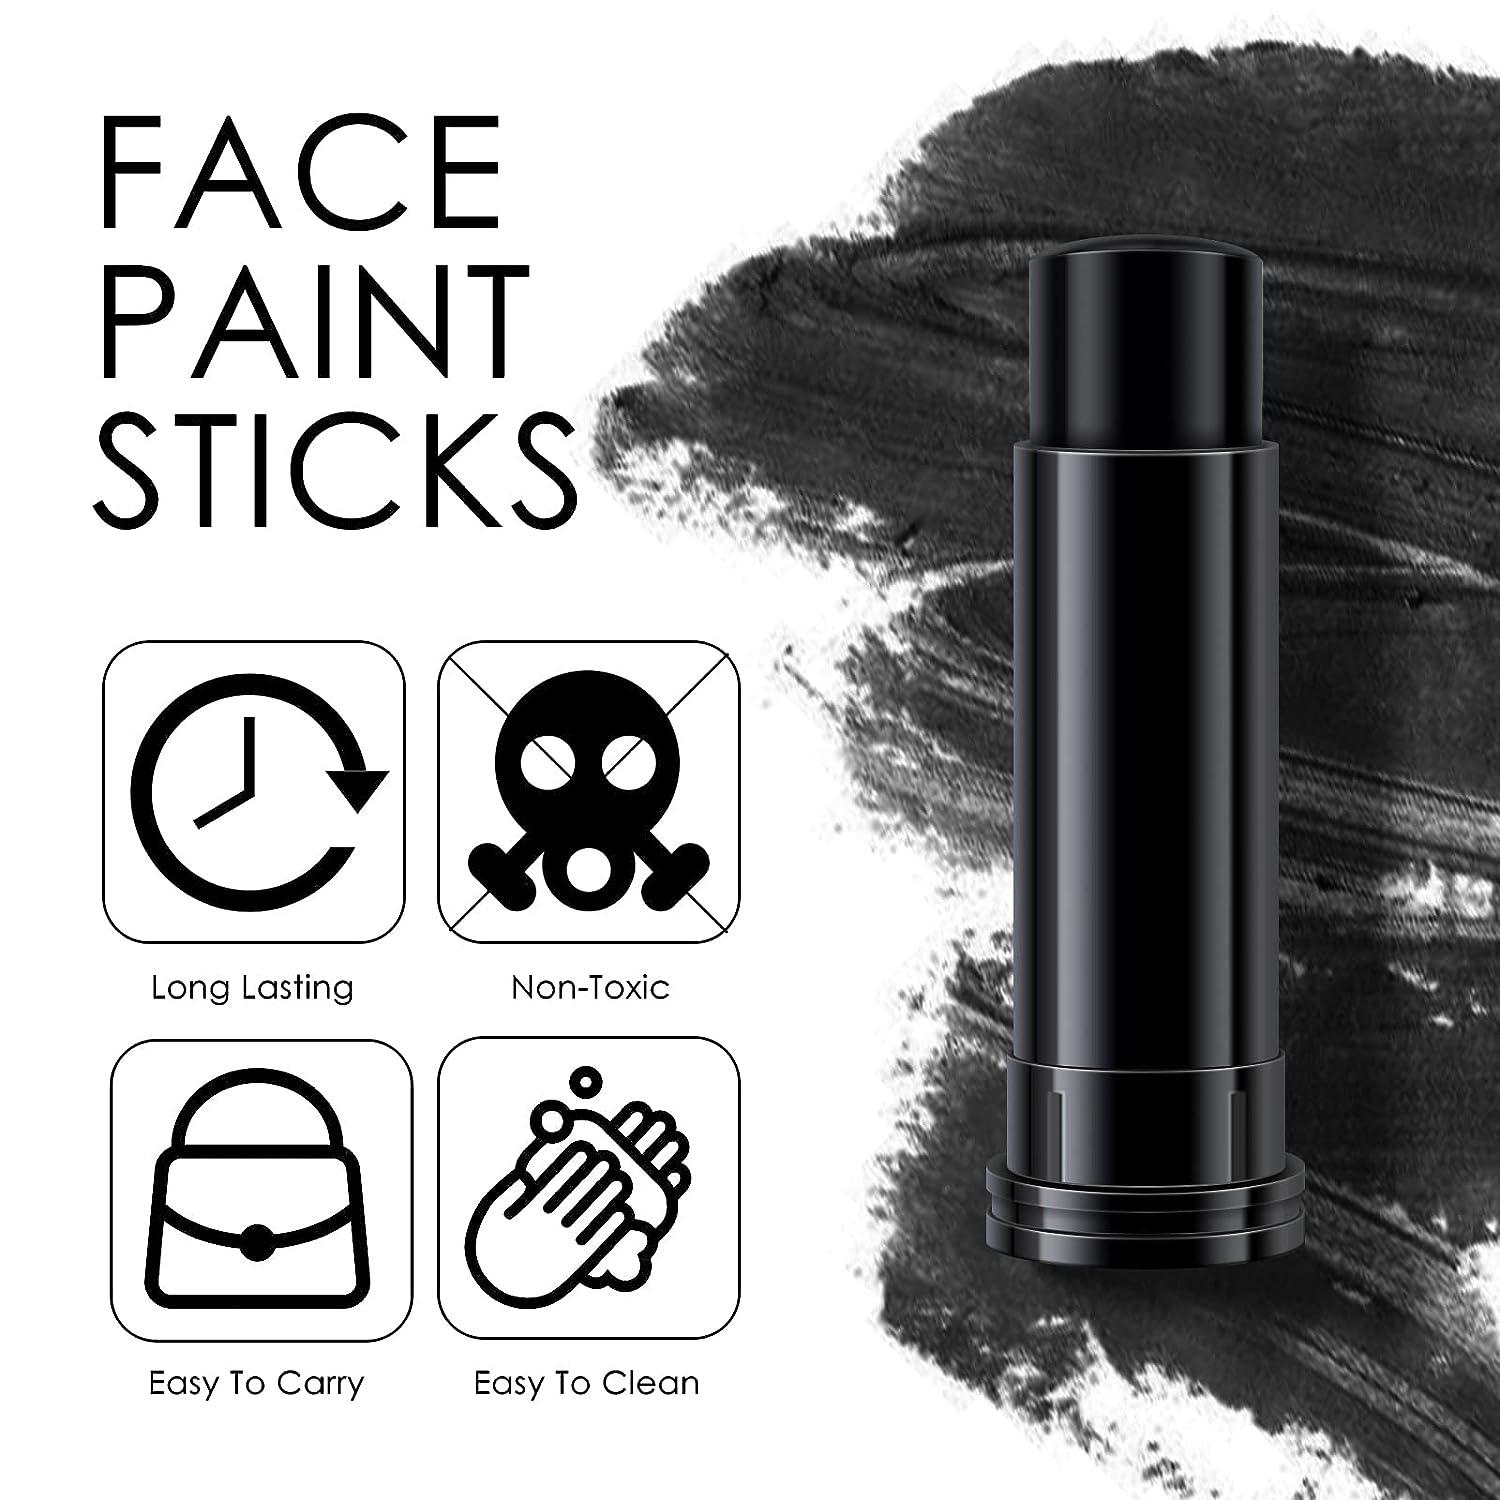 3 PCS Eye Black Football Eyeblack Stick Face Paint for Sports, Black Face  Makeup Camo Face Paint Eye Black Softball/Baseball/Football/Lacrosse